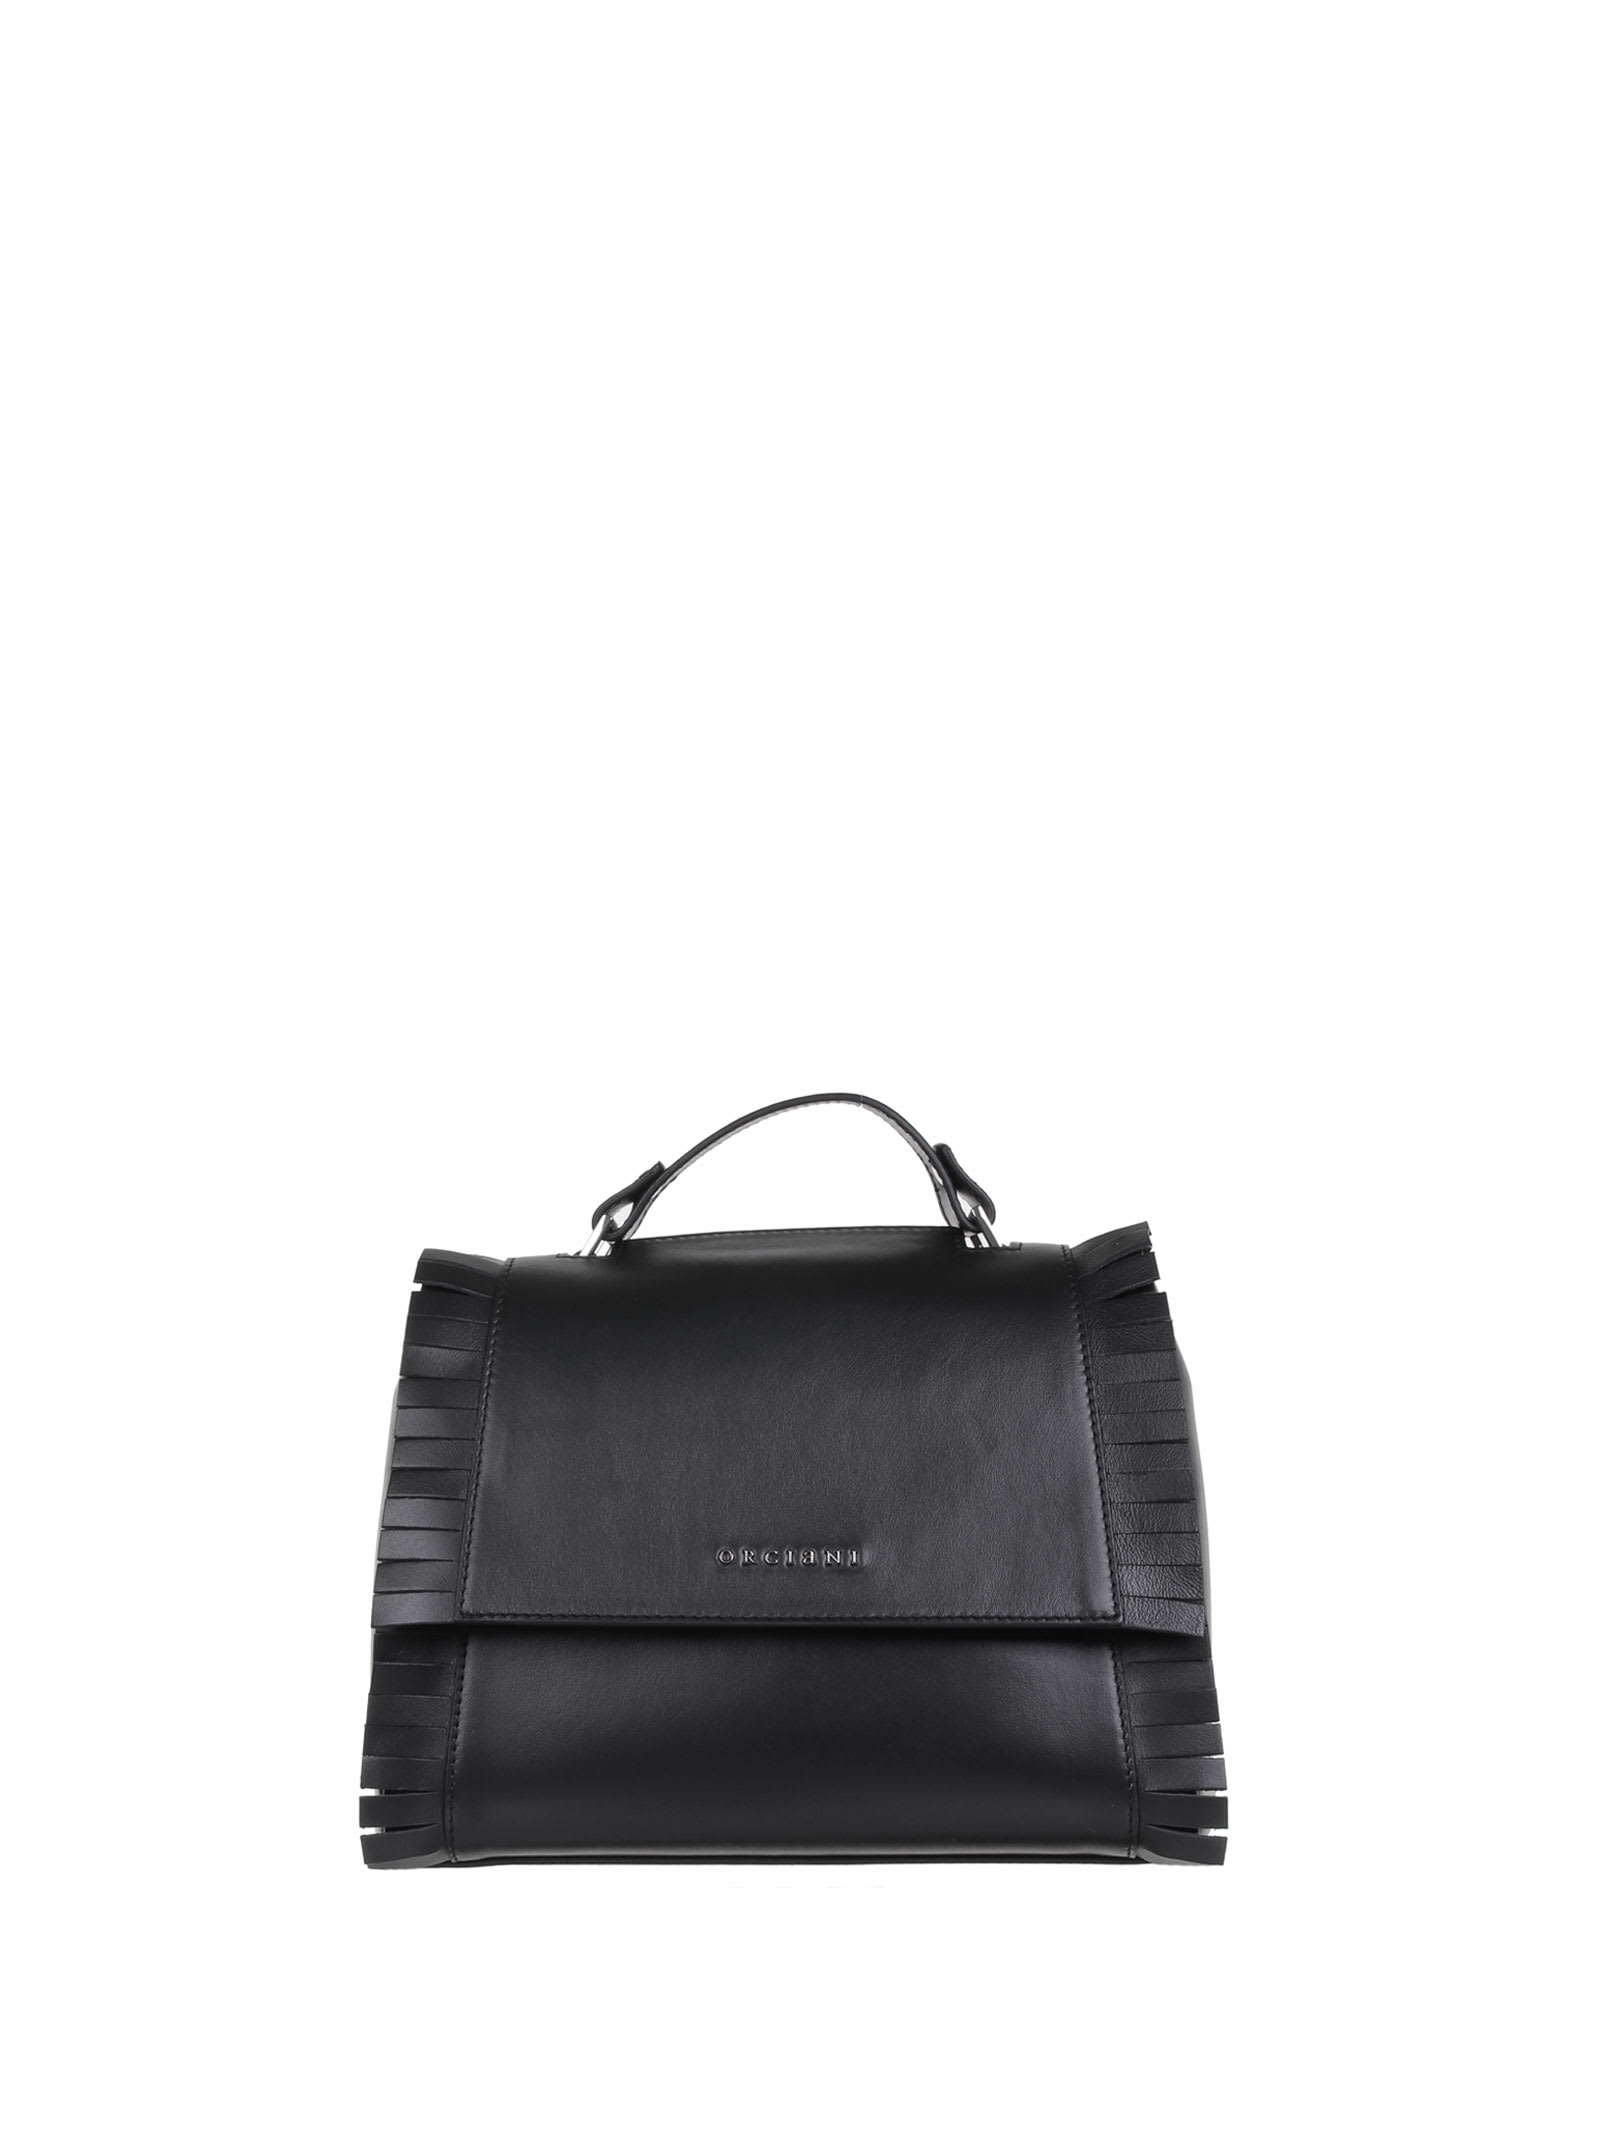 Orciani Sveva Black Leather Handbag